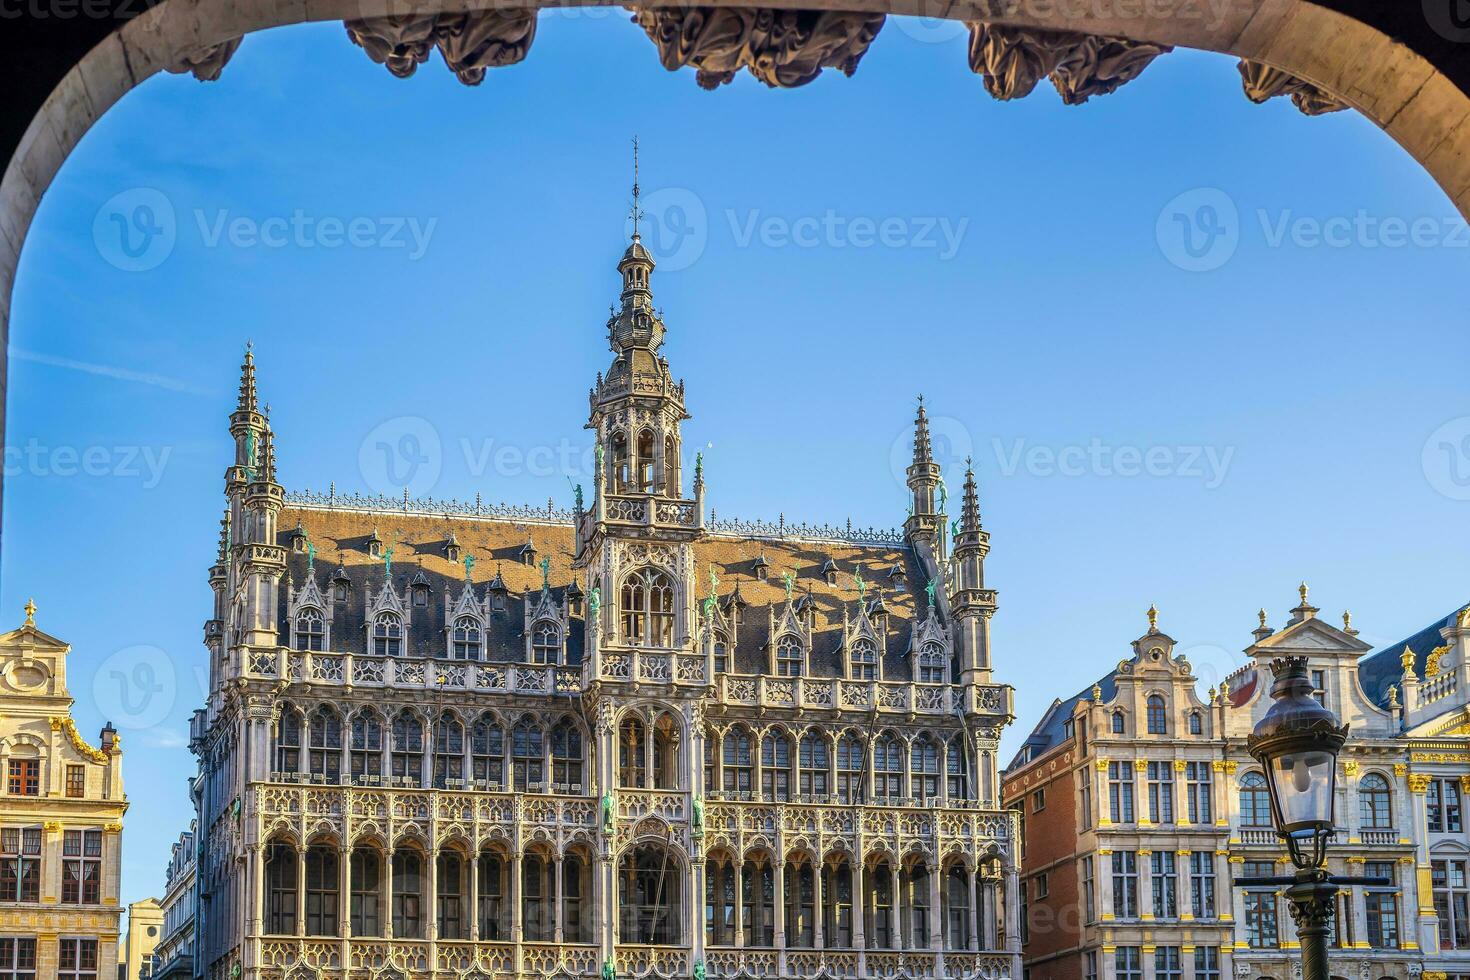 groots plaats in oud stad- Brussel, belgie stad foto